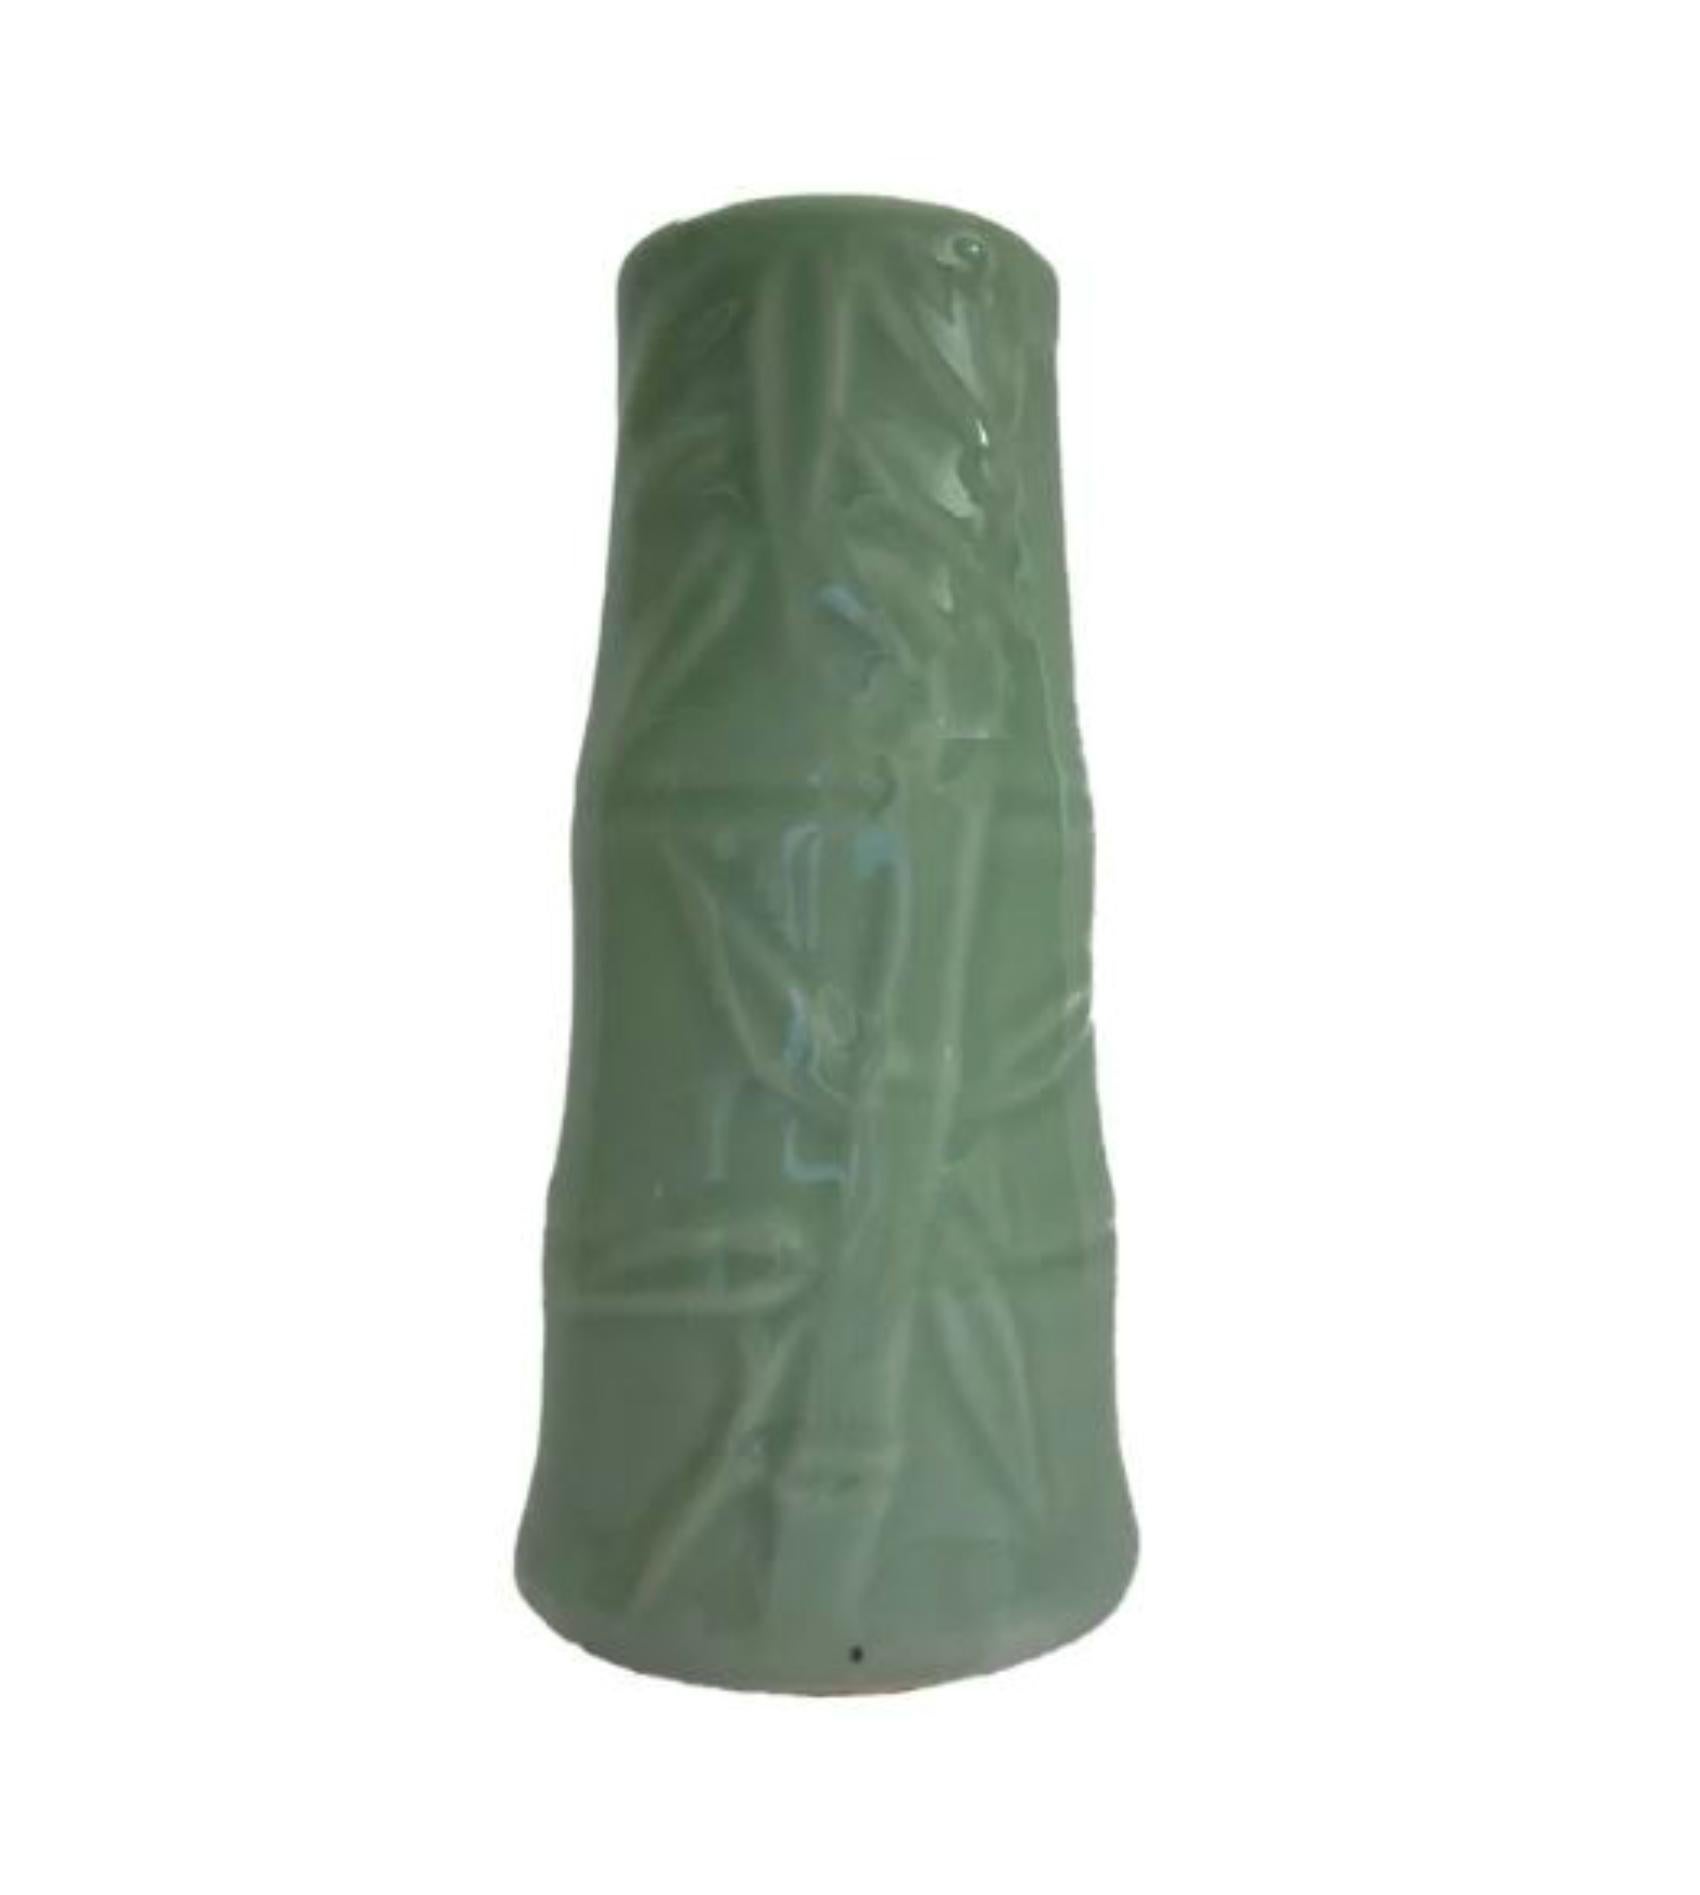 Vintage Asian porcelain vase with celadon glaze - bamboo form - unsigned - mid 20th century.

Excellent vintage condition - no loss - no damage - no restoration.

Size - 4